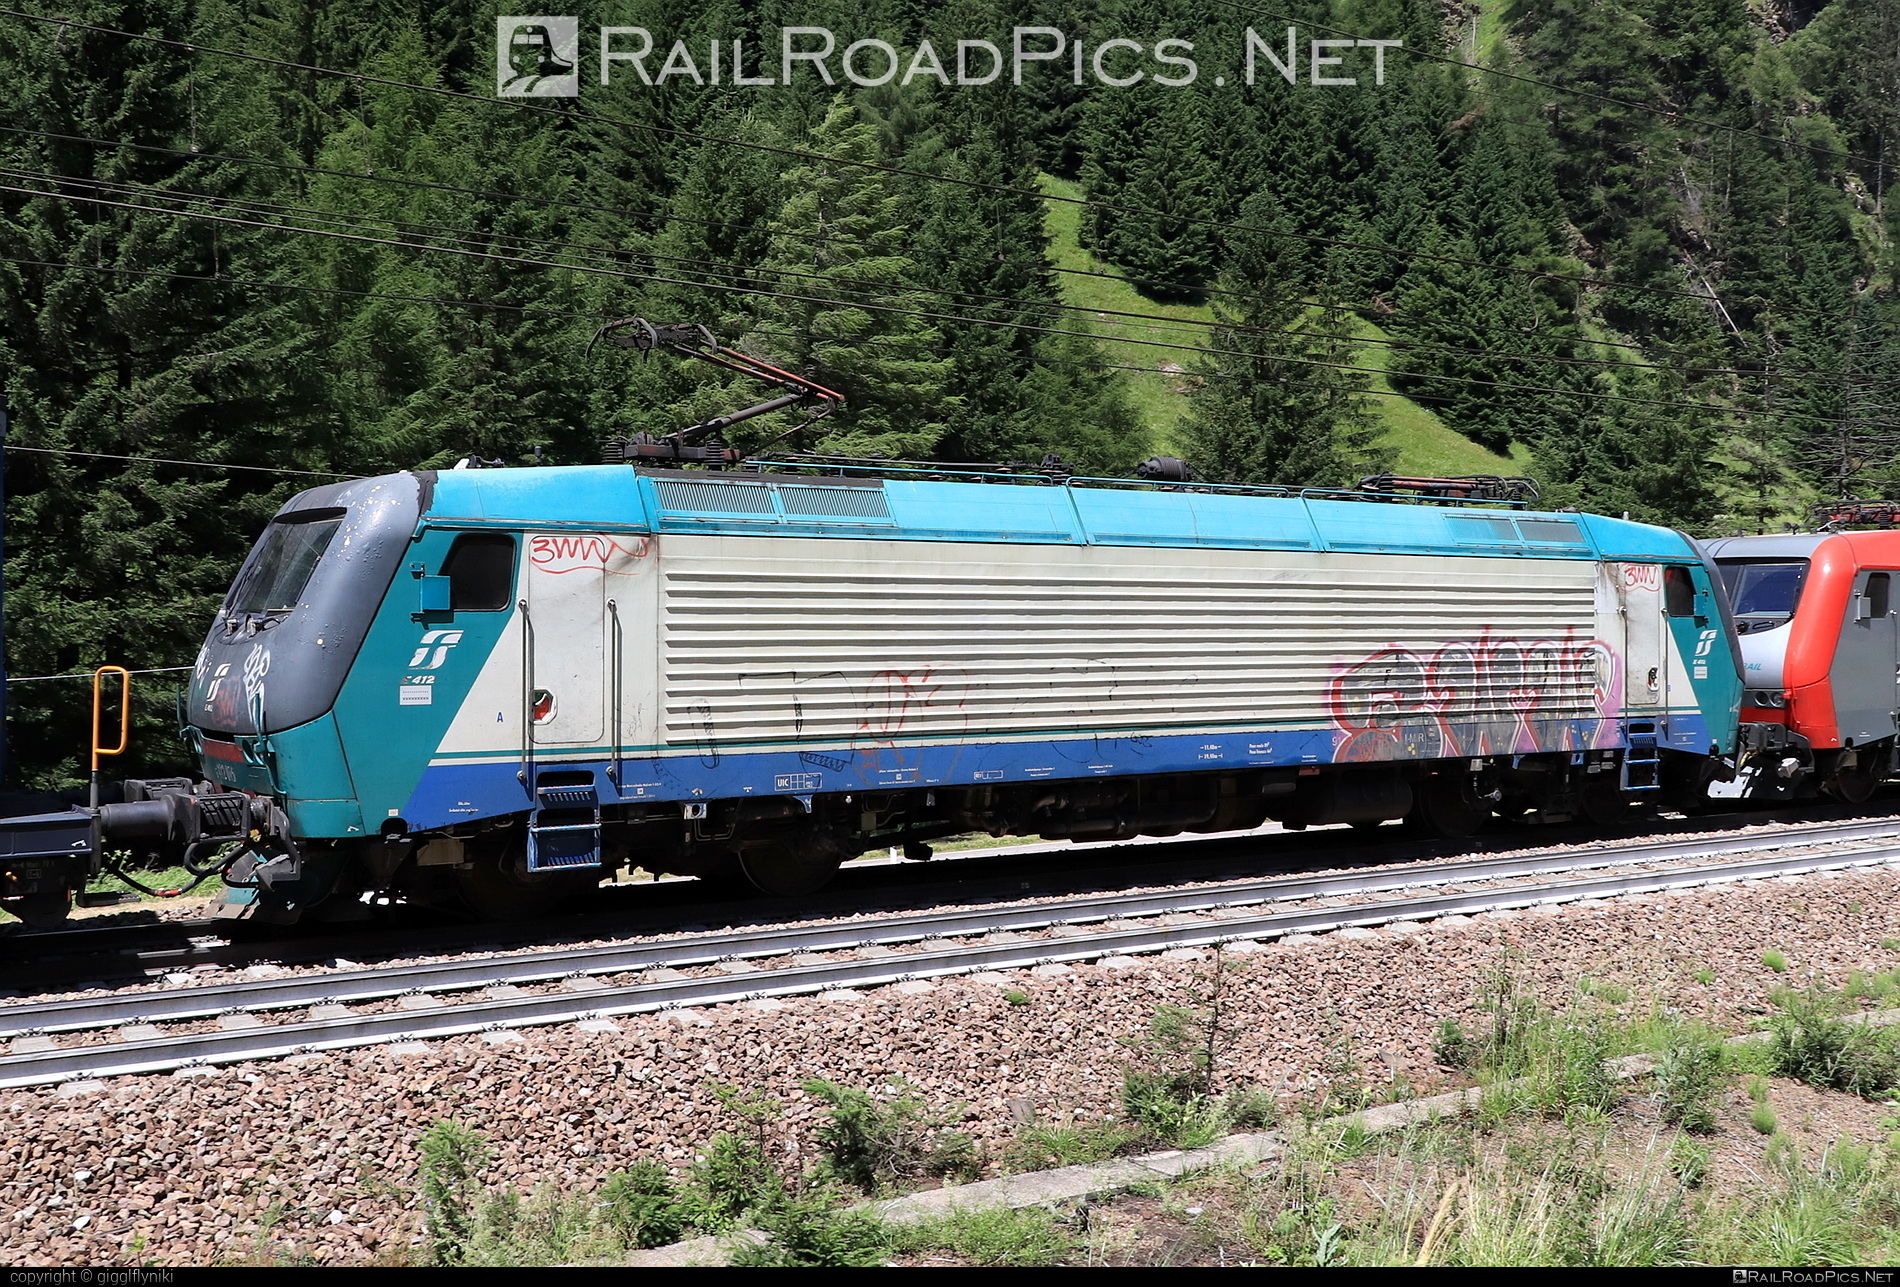 FS Class E.412 - E412 015 operated by Mercitalia Rail S.r.l. #e412 #ferroviedellostato #fs #fsClassE412 #fsitaliane #graffiti #mercitalia